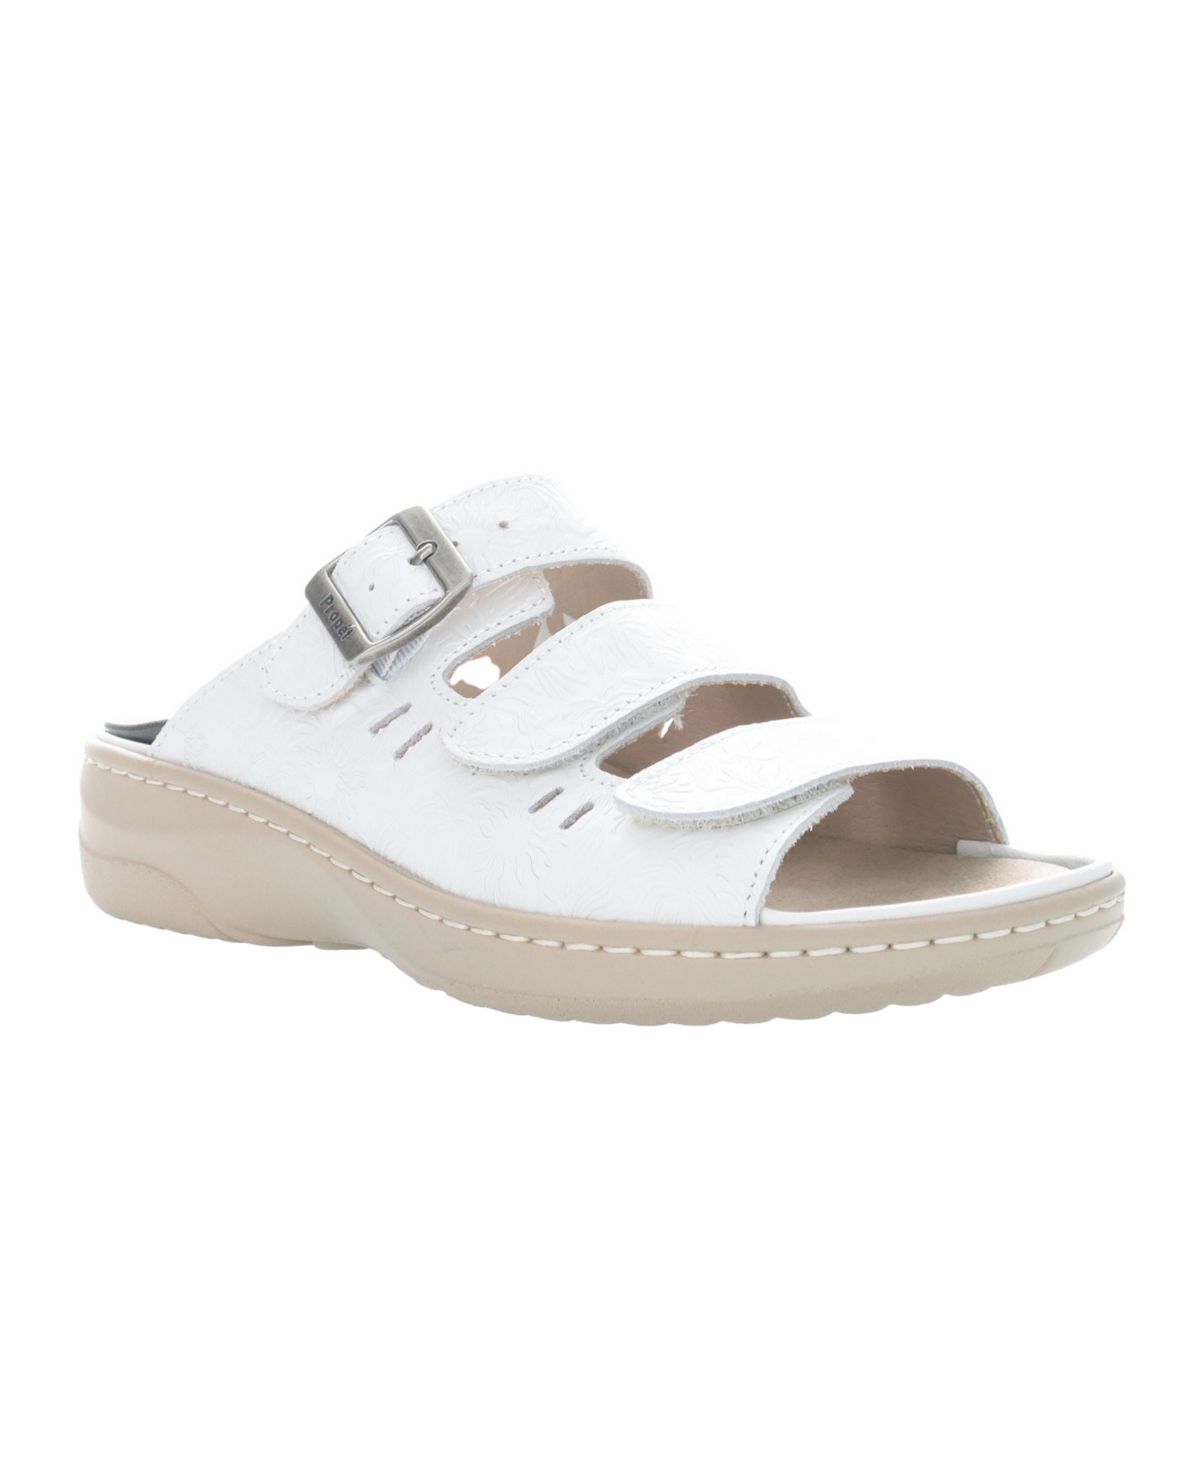 Women's Breezy Walker Slide Sandals - White Onyx